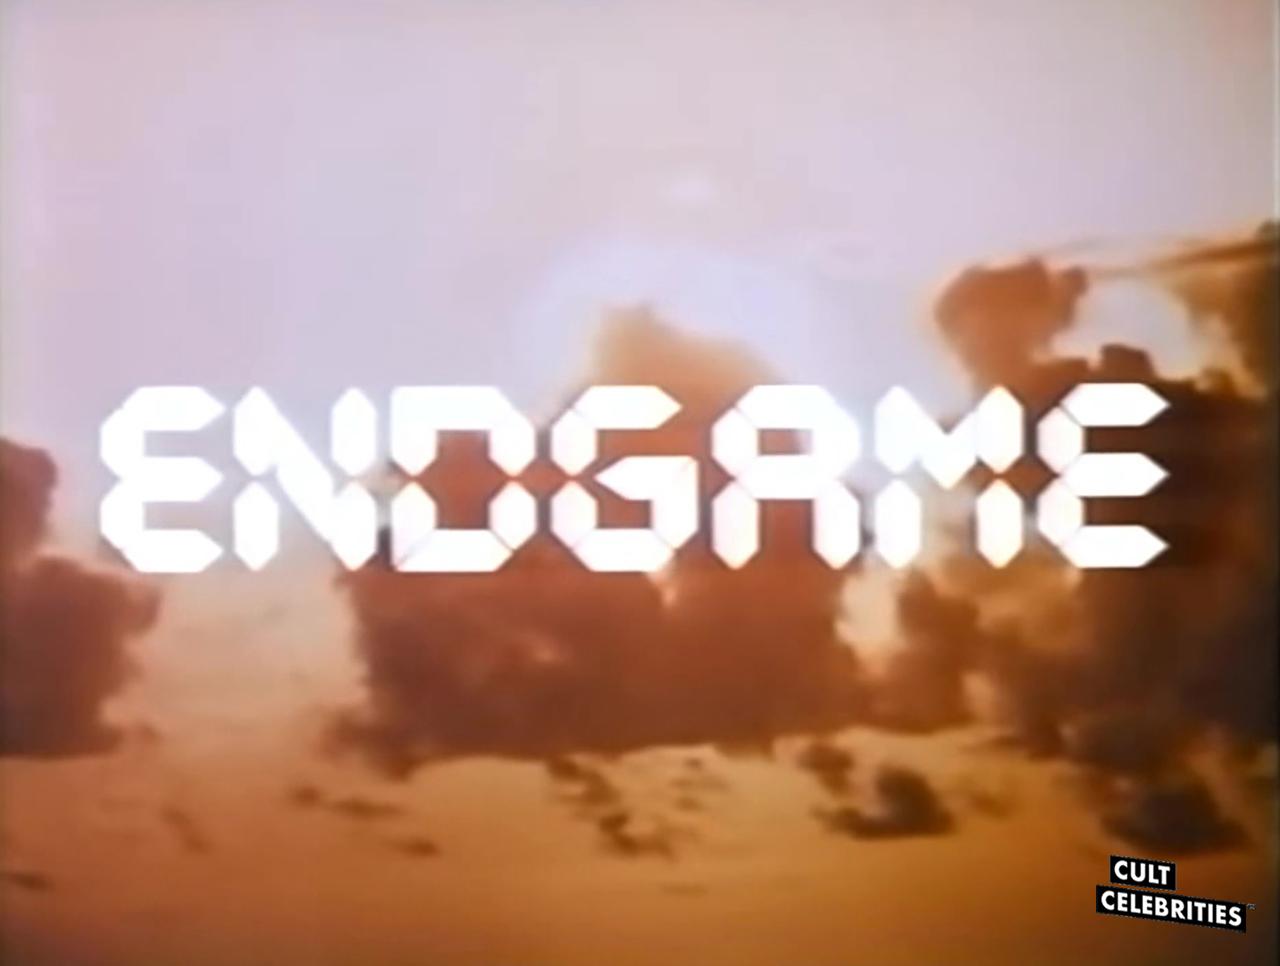 Endgame - Bronx lotta finale (1983)